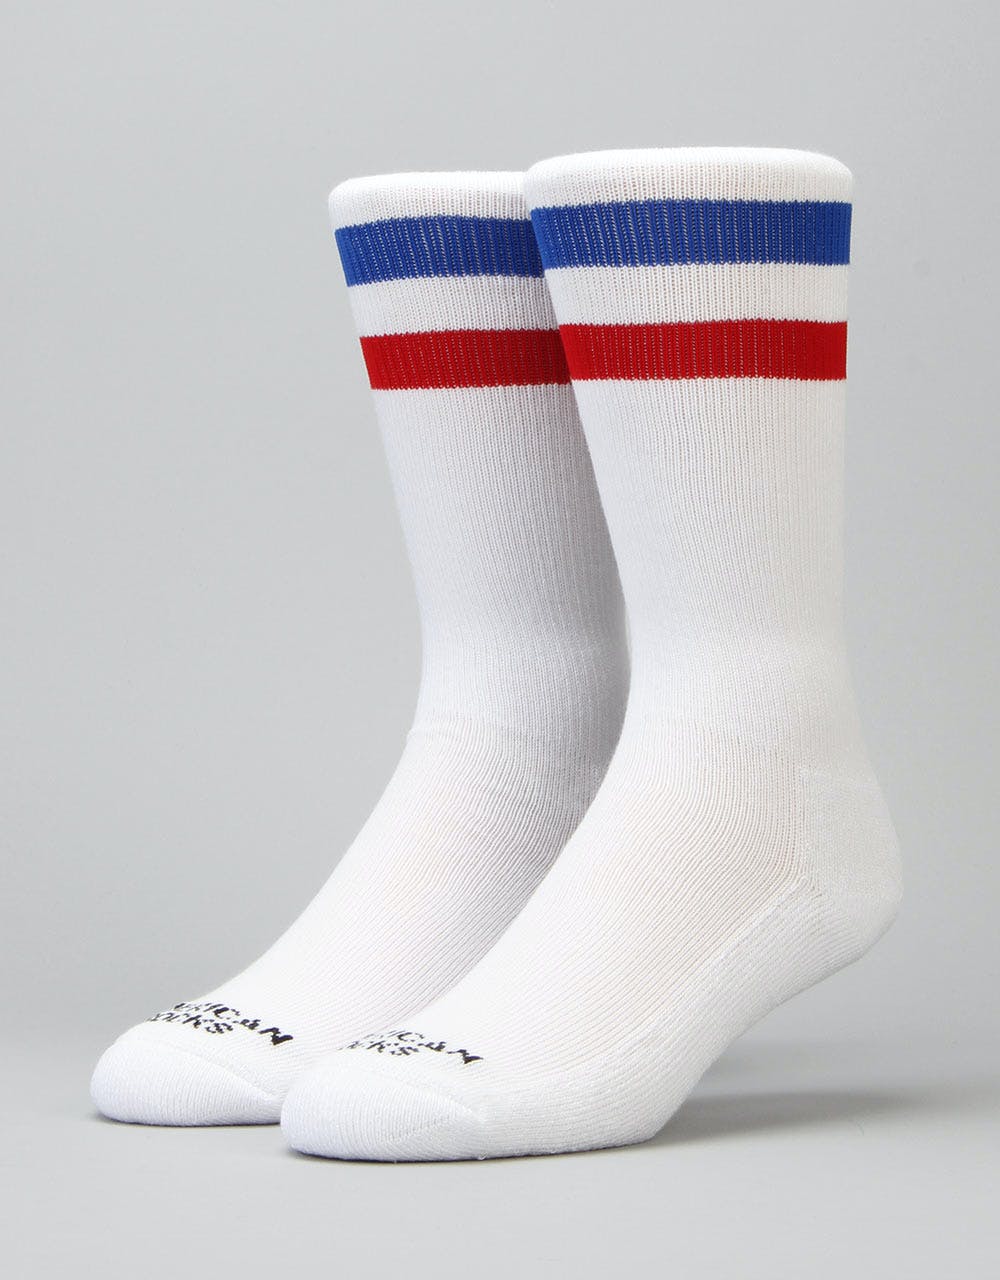 American Socks American Pride Mid High Socks - White/Red/Blue